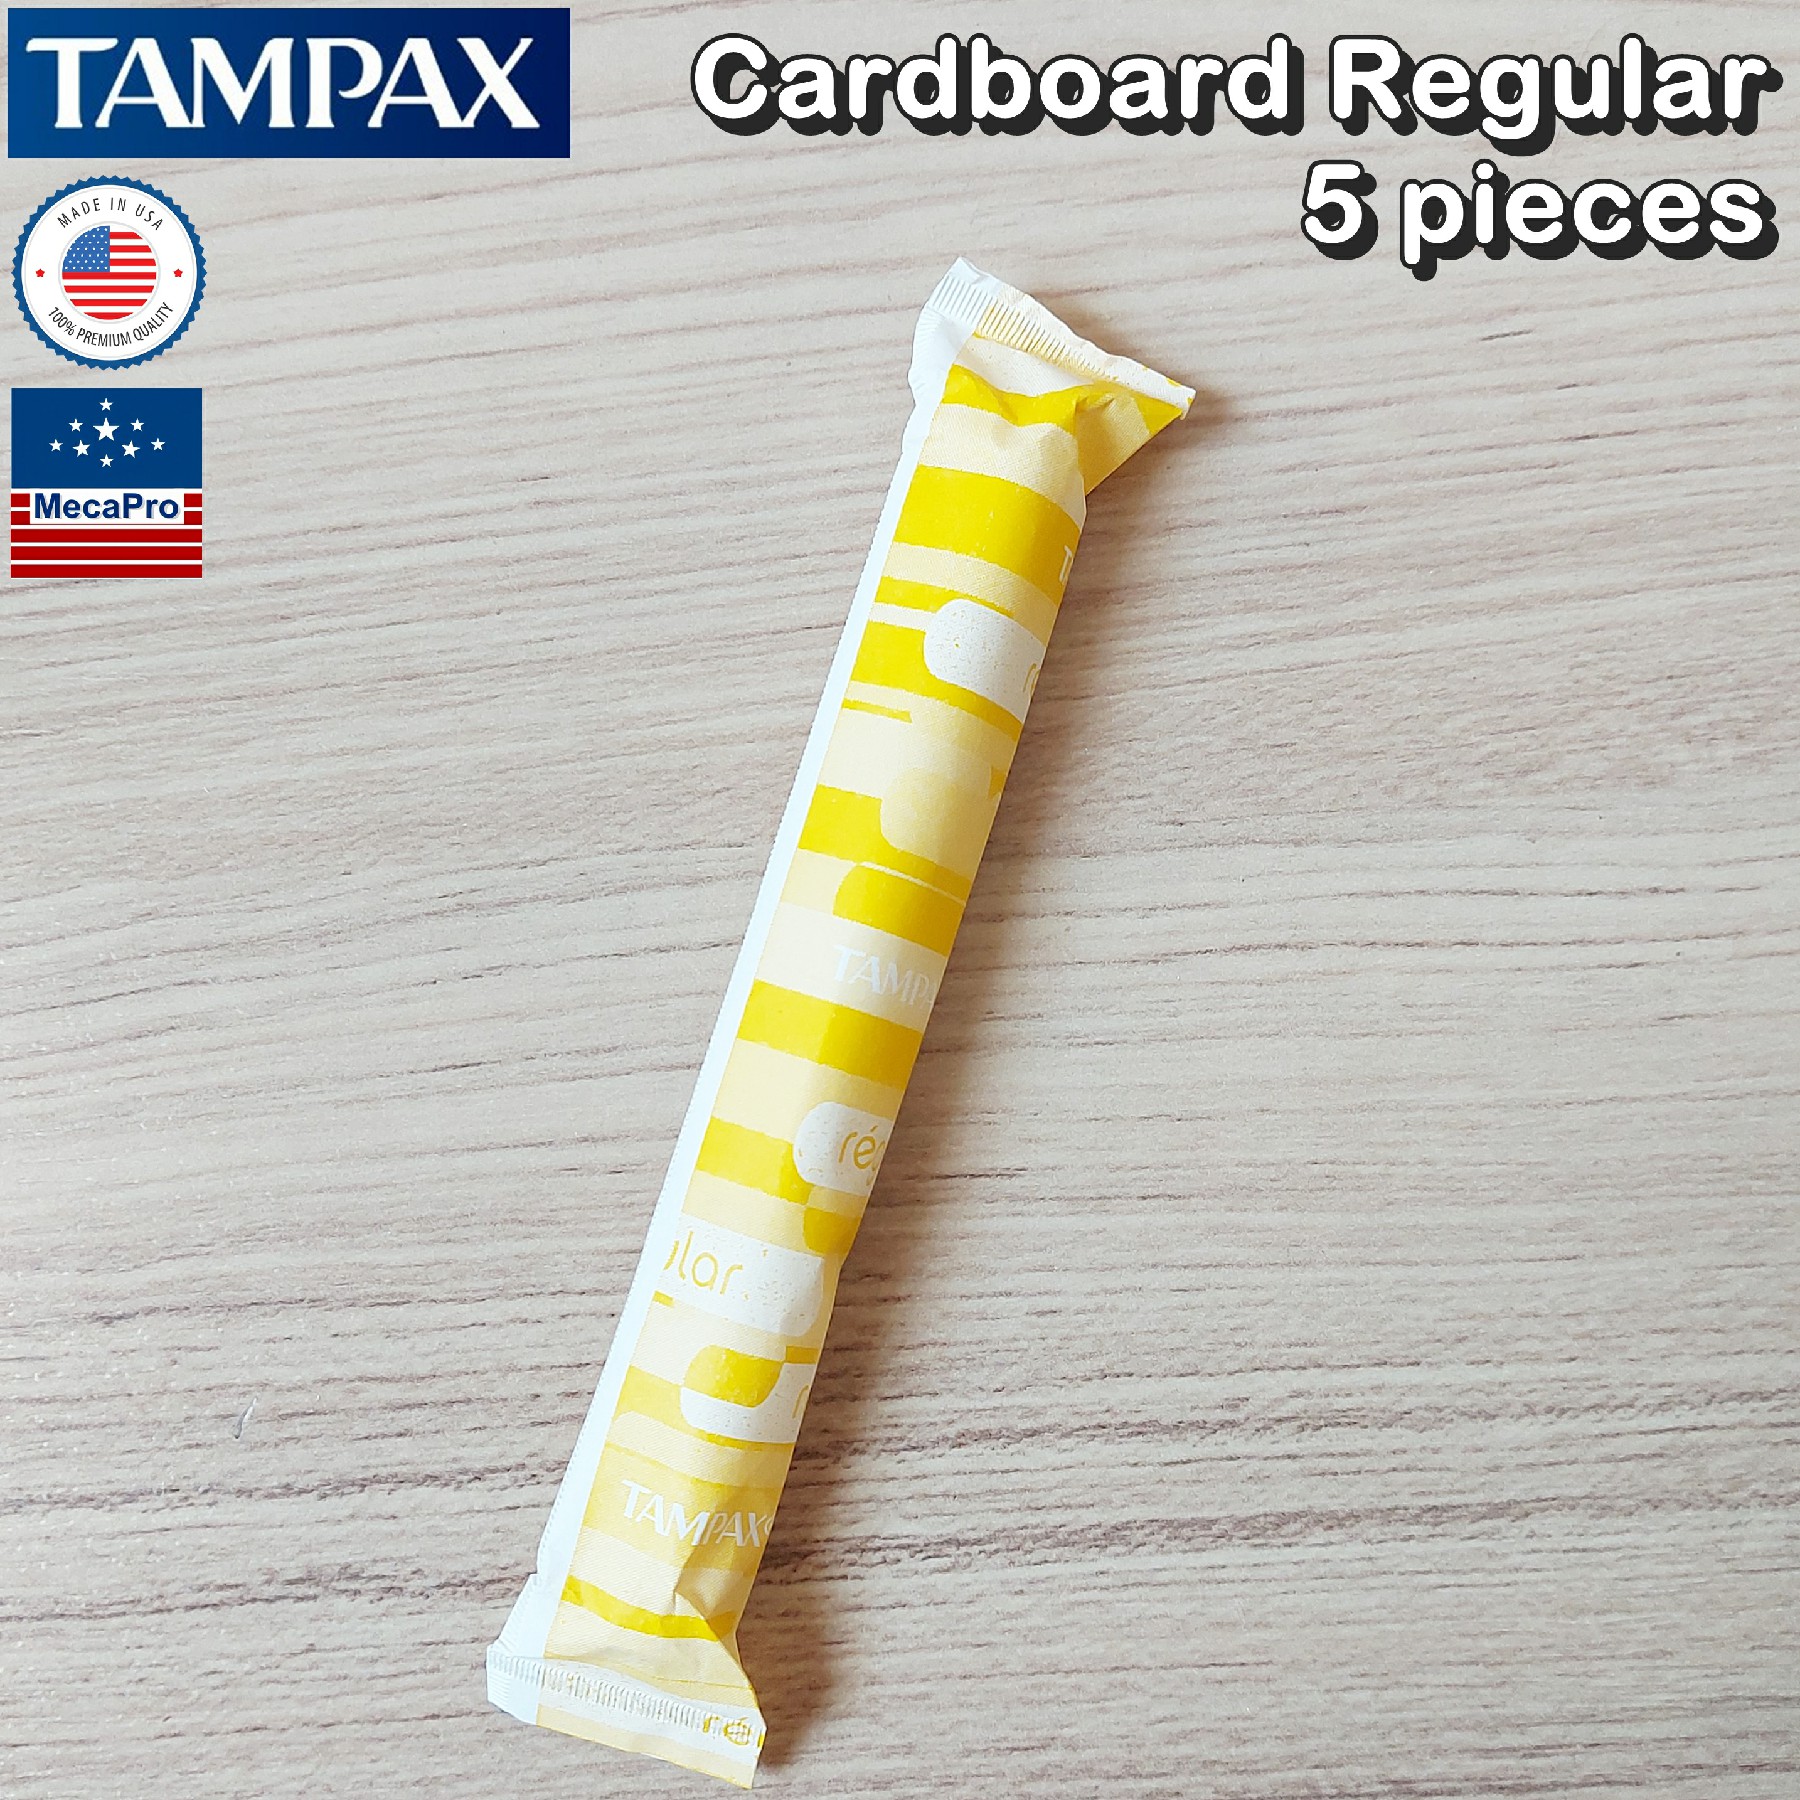 Tampax® Cardboard Regular Tampons 5 Pieces ผ้าอนามัยแบบสอด 5 ชิ้น เหมาะกับวันมาปกติ